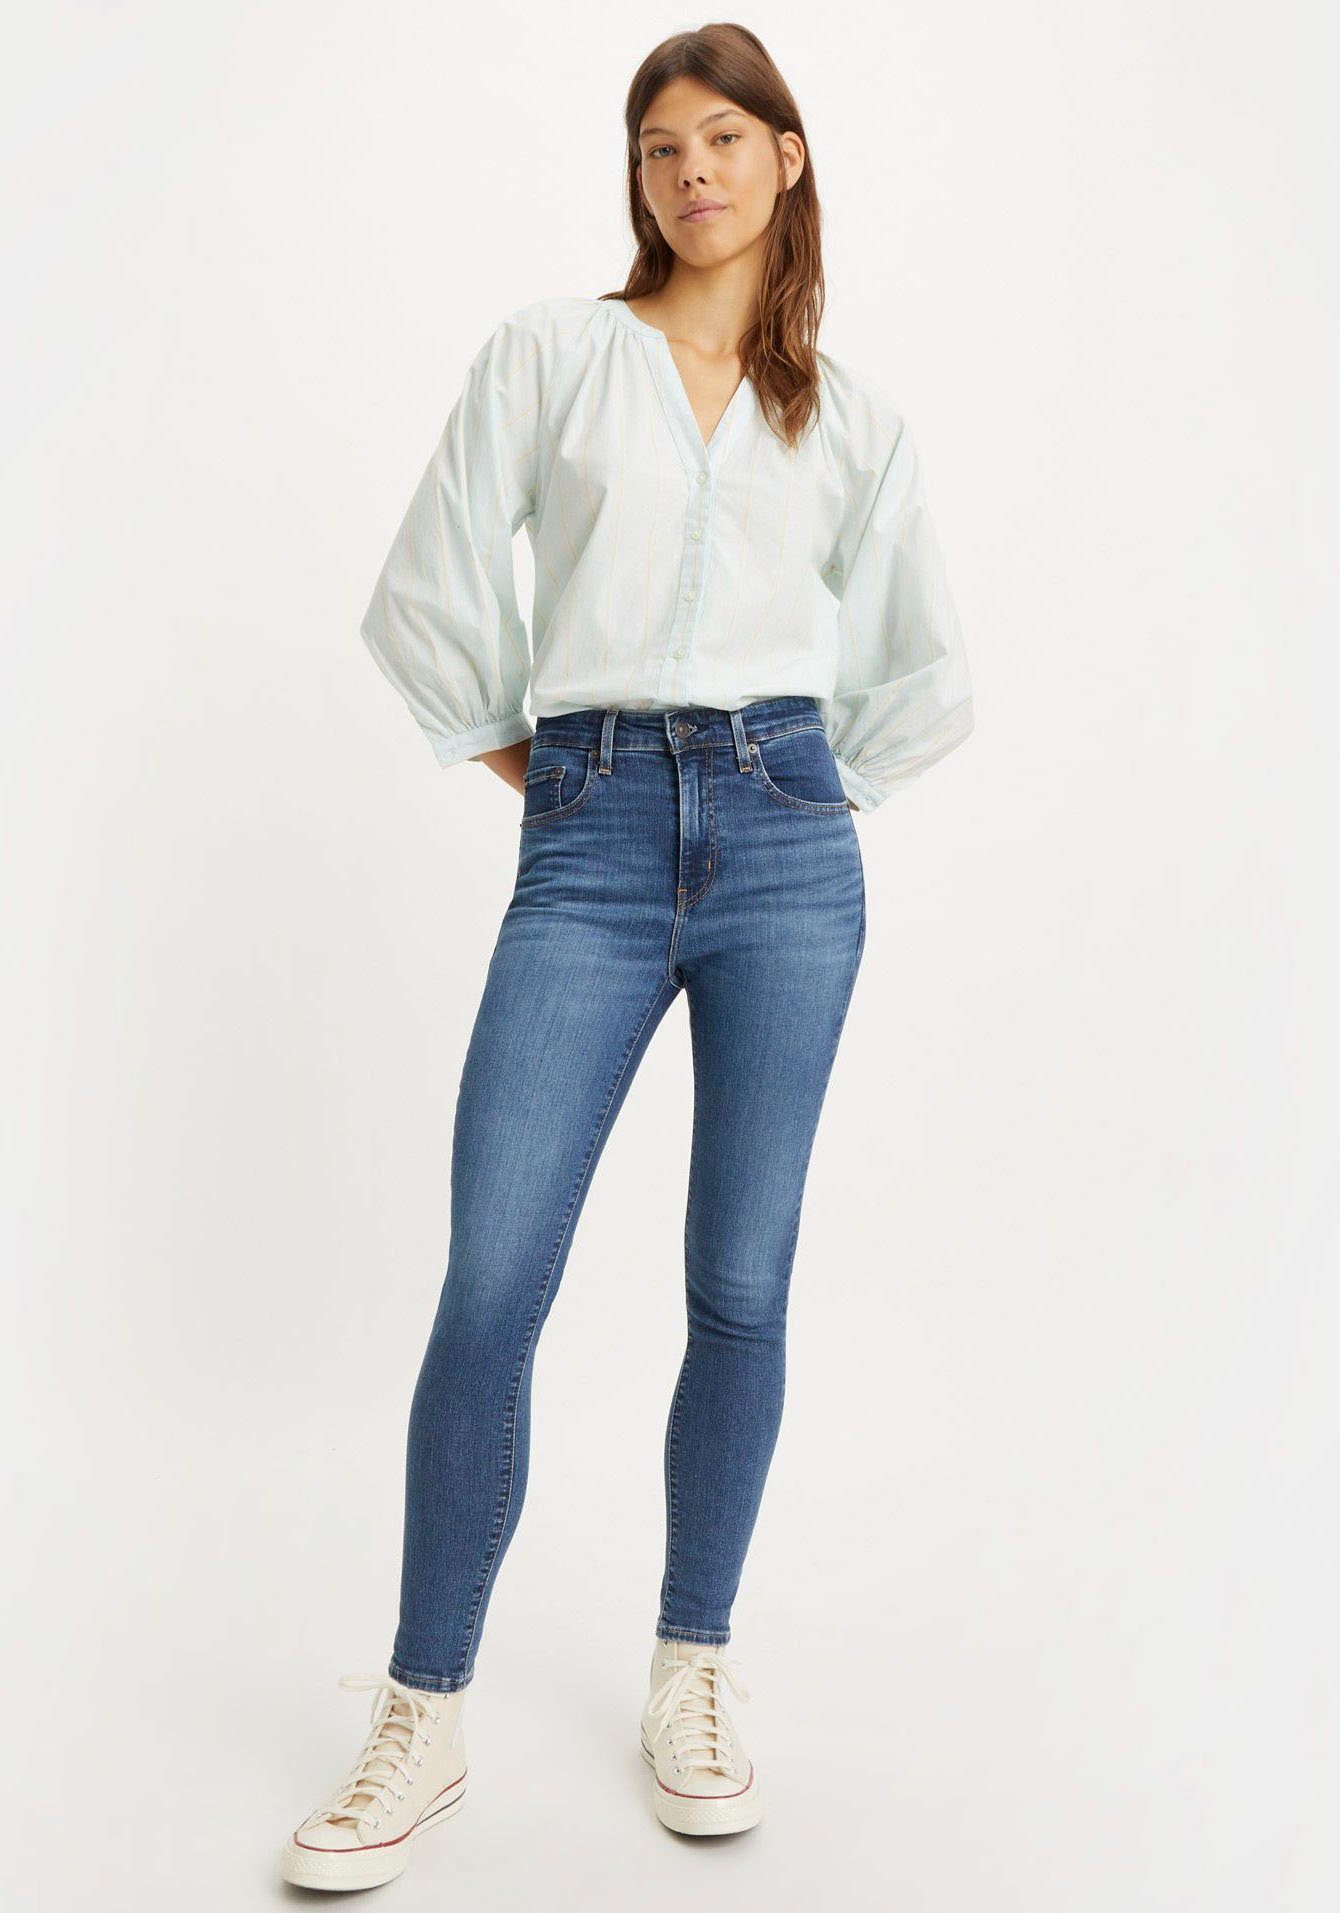 Levi's® in indigo rise High mit Bund 721 skinny blue mid hohem worn Skinny-fit-Jeans